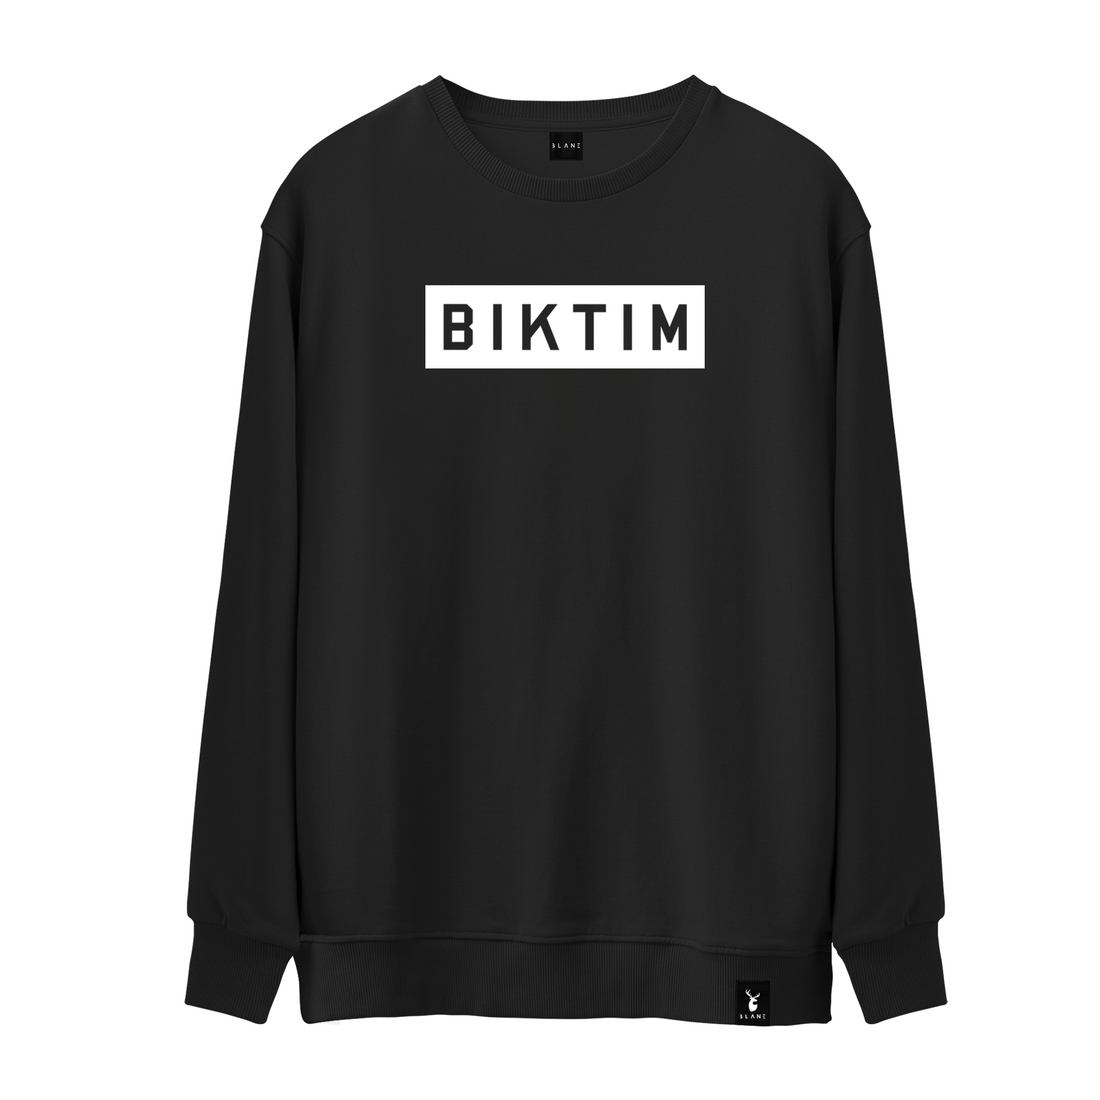 BIKTIM - Sweatshirt